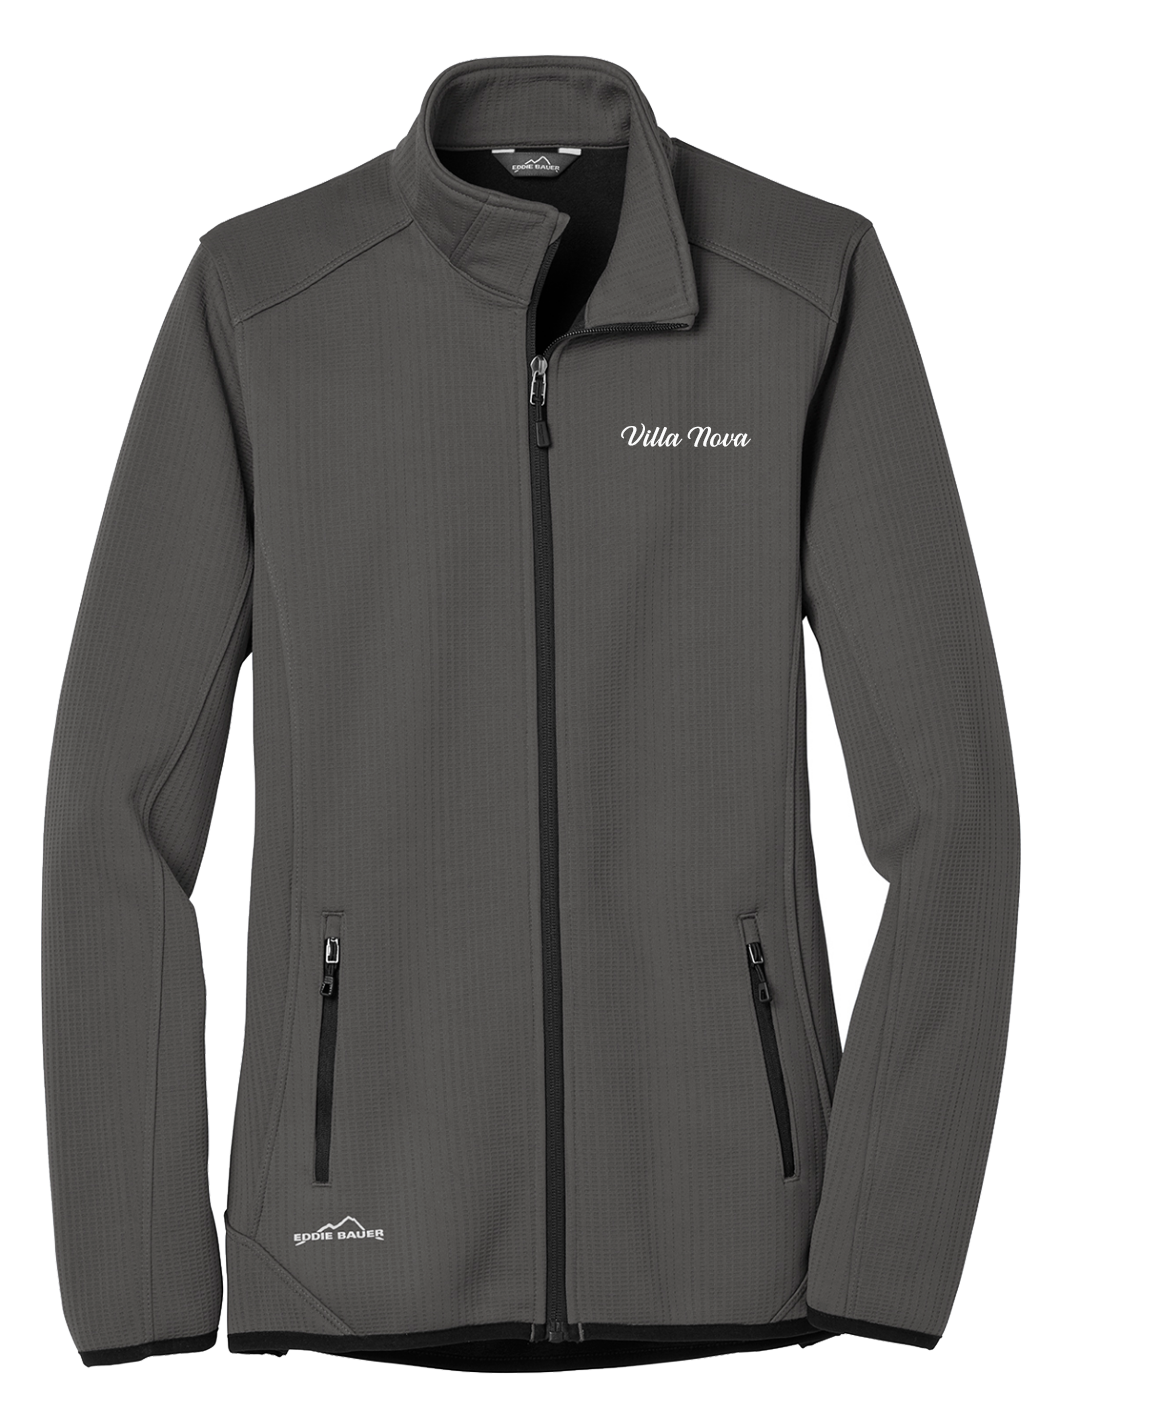 Villa Nova - Ladies - Eddie Bauer ® Dash Full-Zip Fleece Jacket